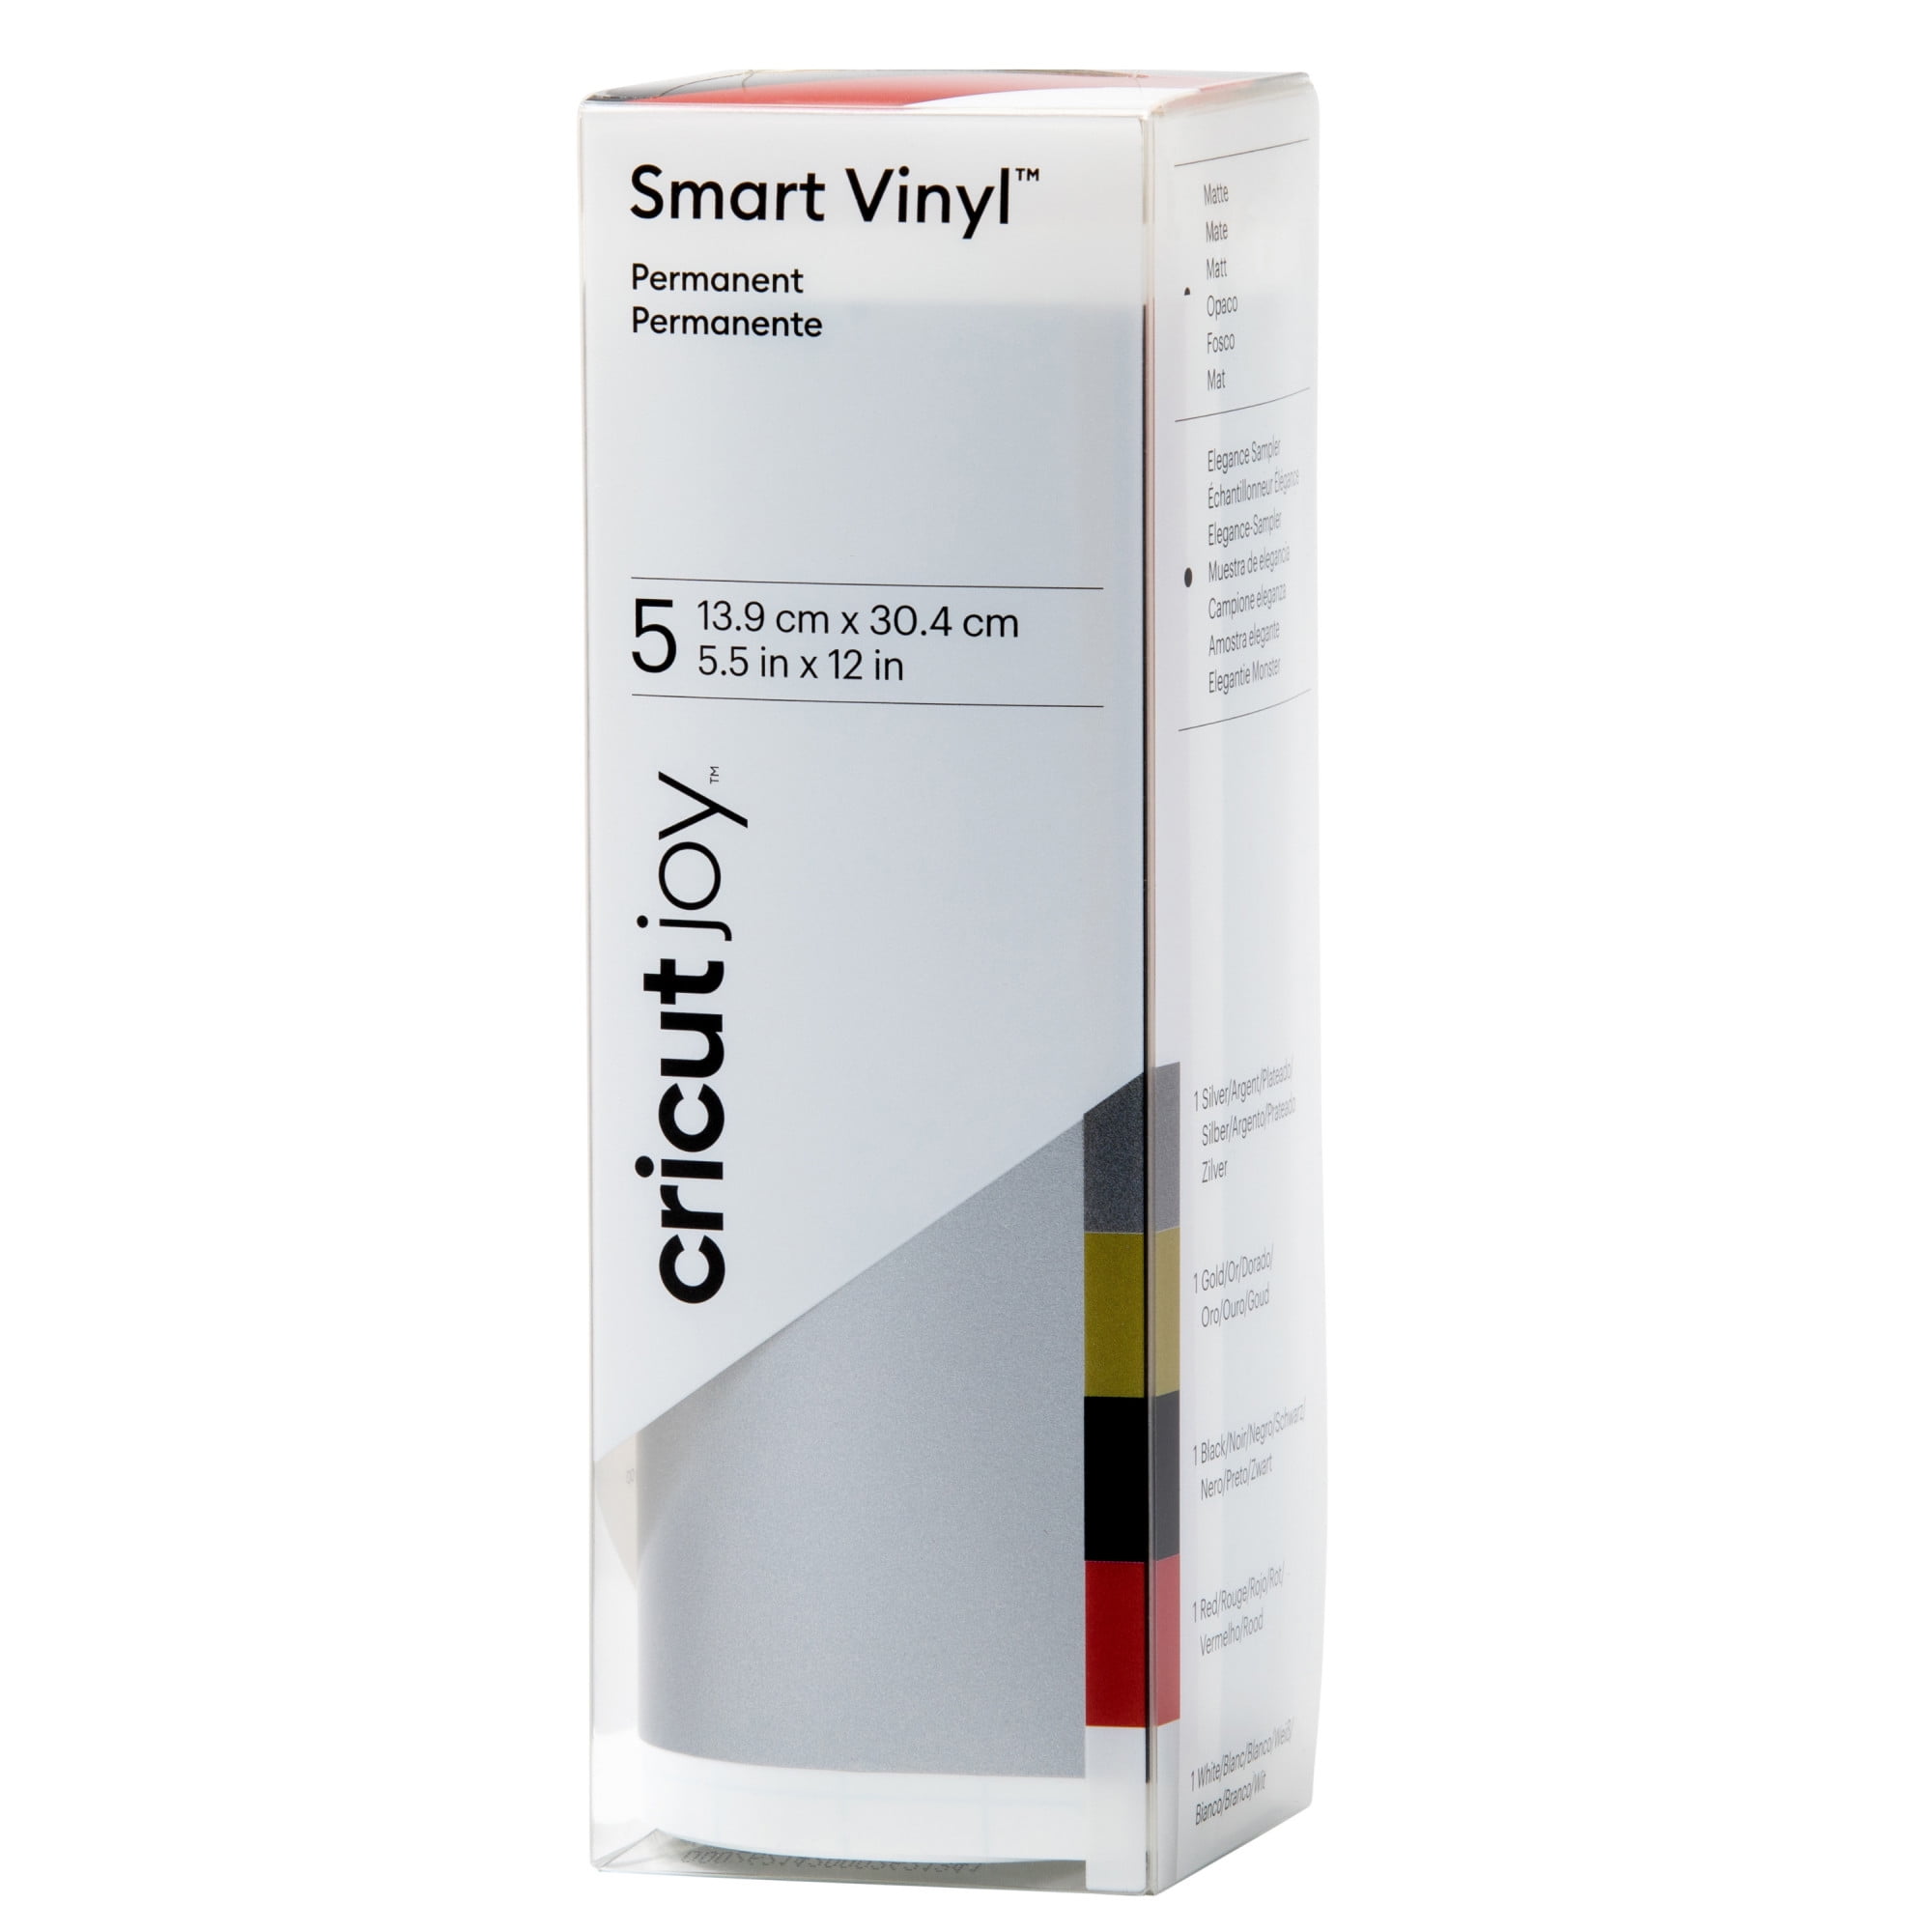 Cricut Joy Smart Vinyl - Permanent G 5.5 x 120 - Ban Leong Technologies  Limited